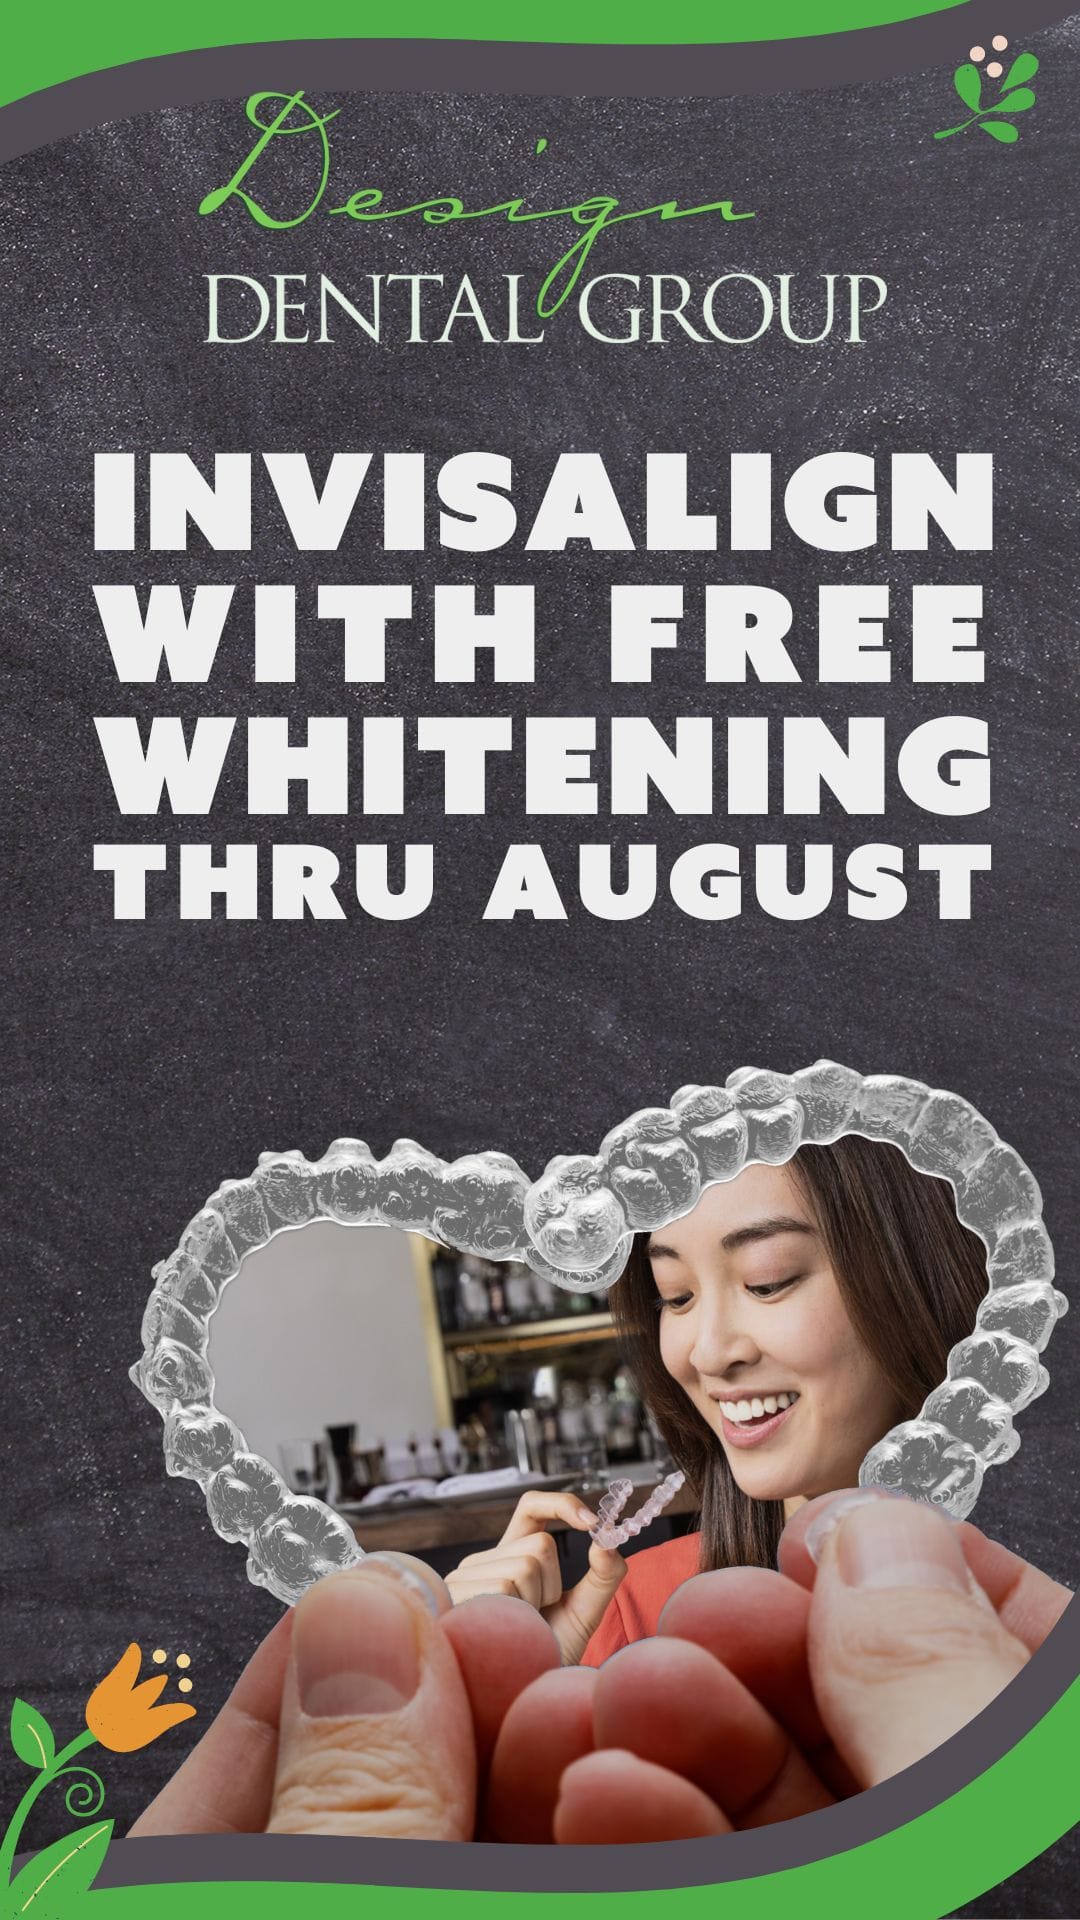 Invisalign with free teeth bleaching thru August